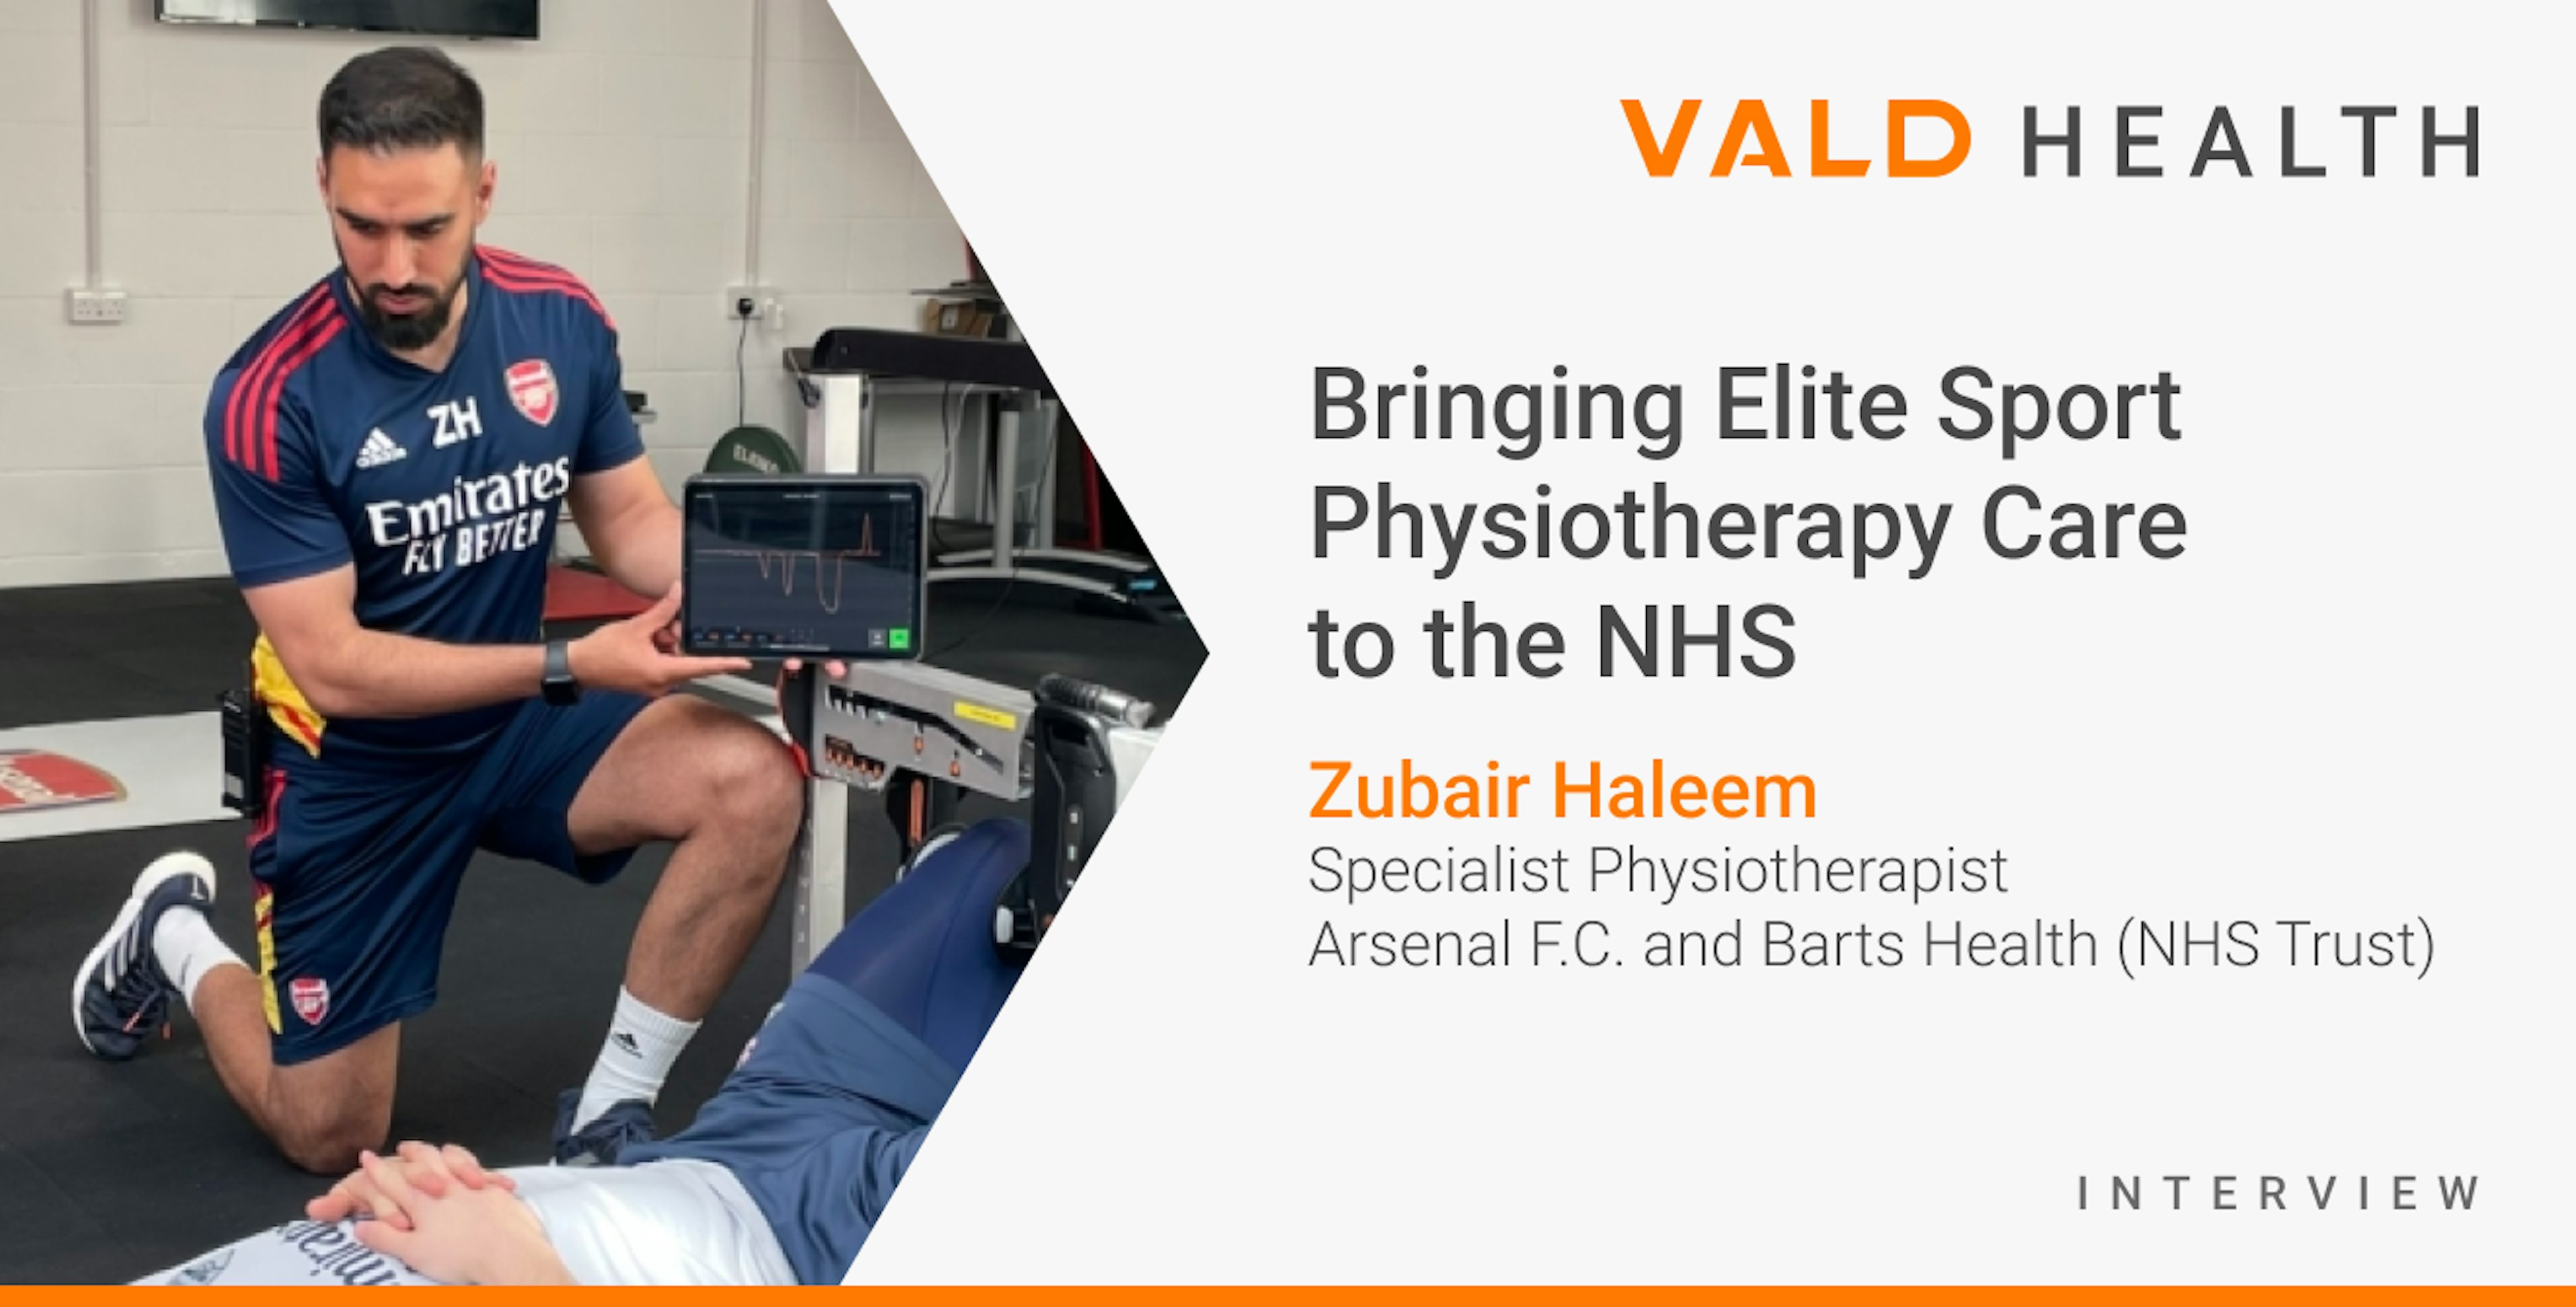 Zubair Haleem: Specialist Physiotherapist - Arsenal F.C and Barts Health (NHS Trust)